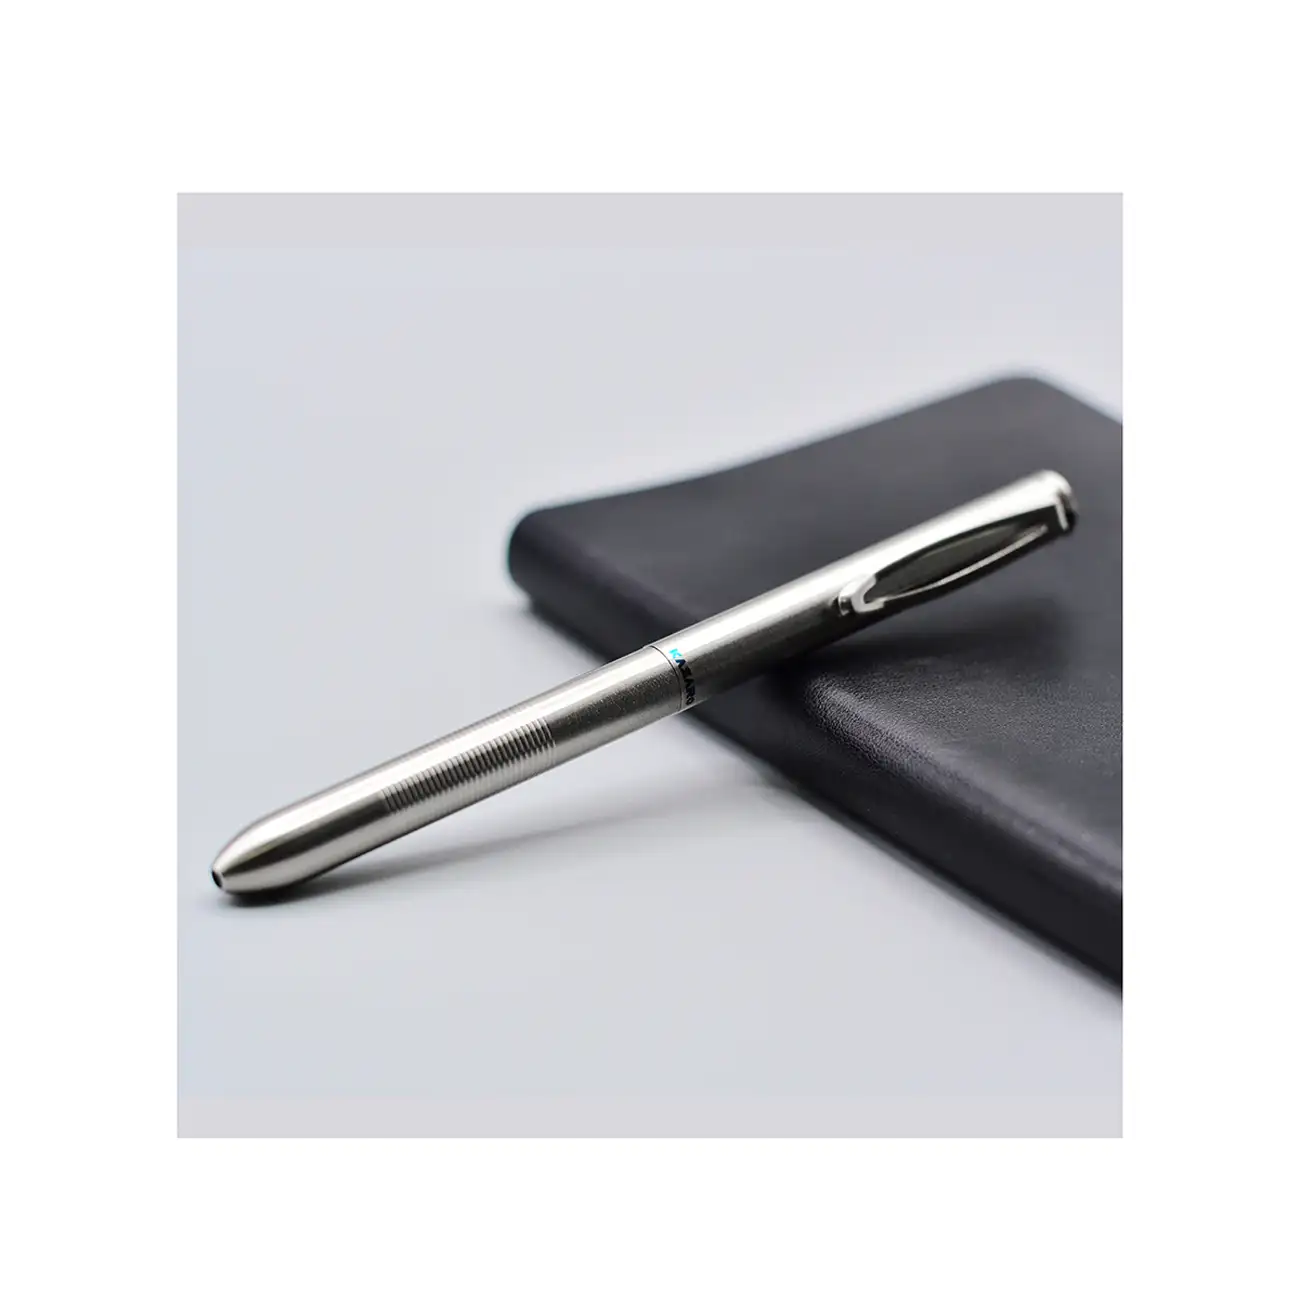 Japanese hot sell high quality import design ballpoint pen in stock